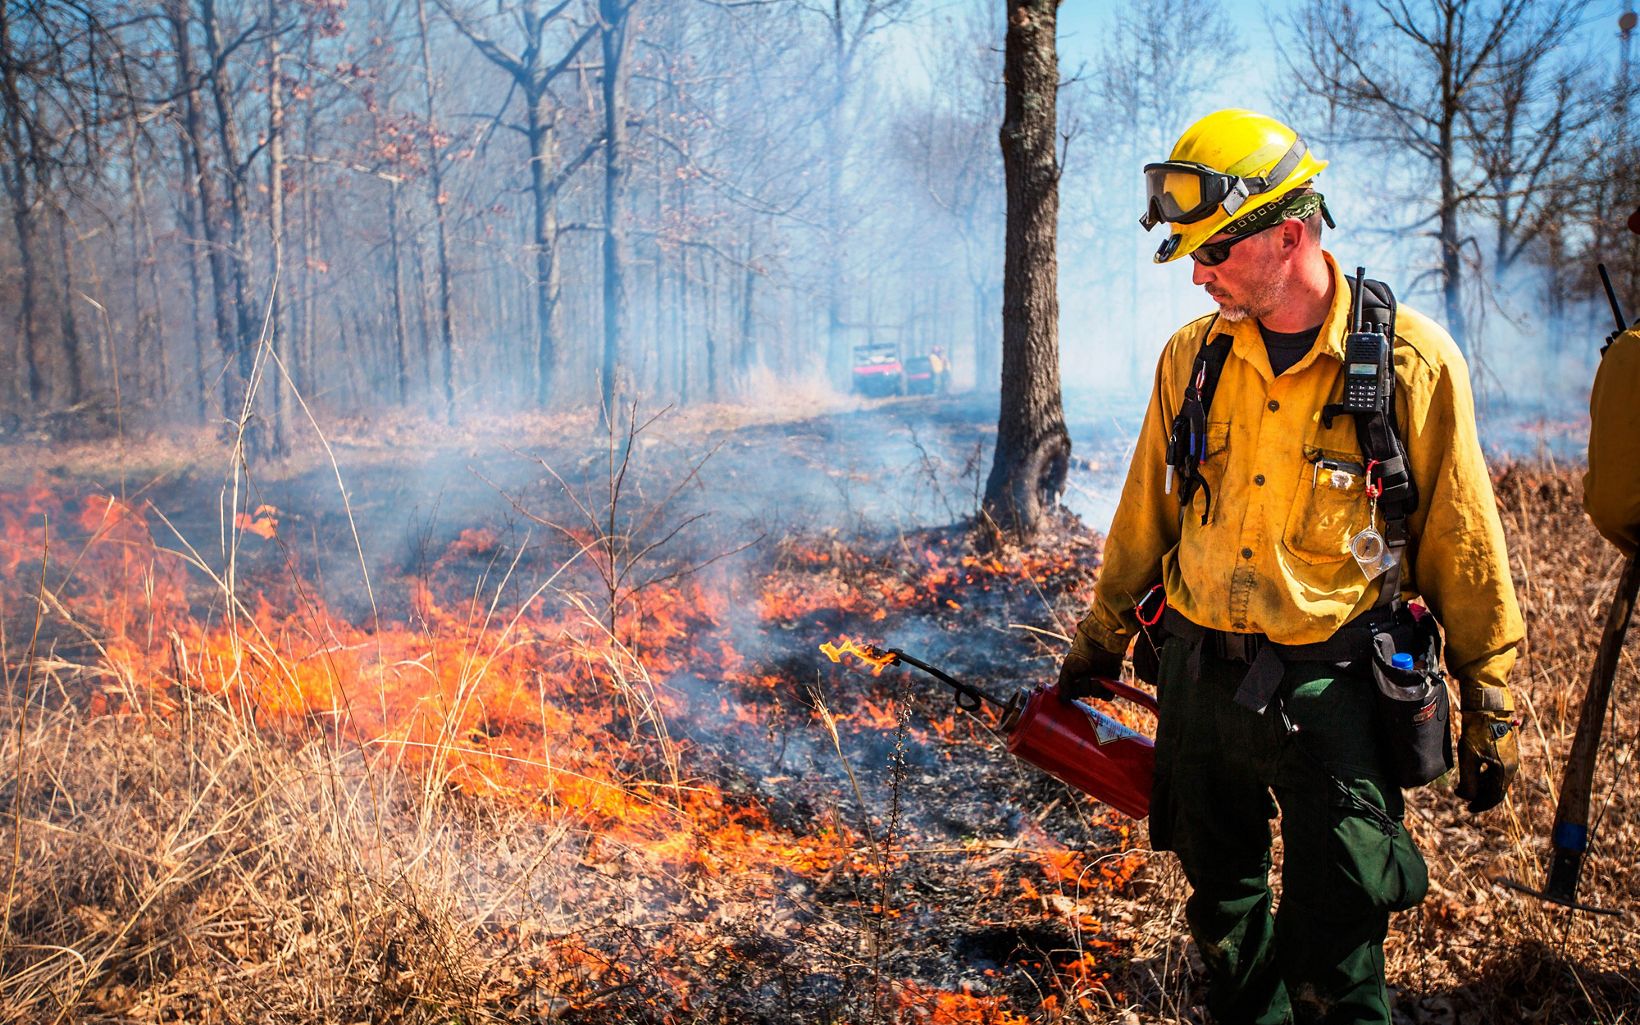 Prescribed Fire Fire personnel light a prescribed burn at a grassland preserve in Kentucky. © Mike Wilkinson